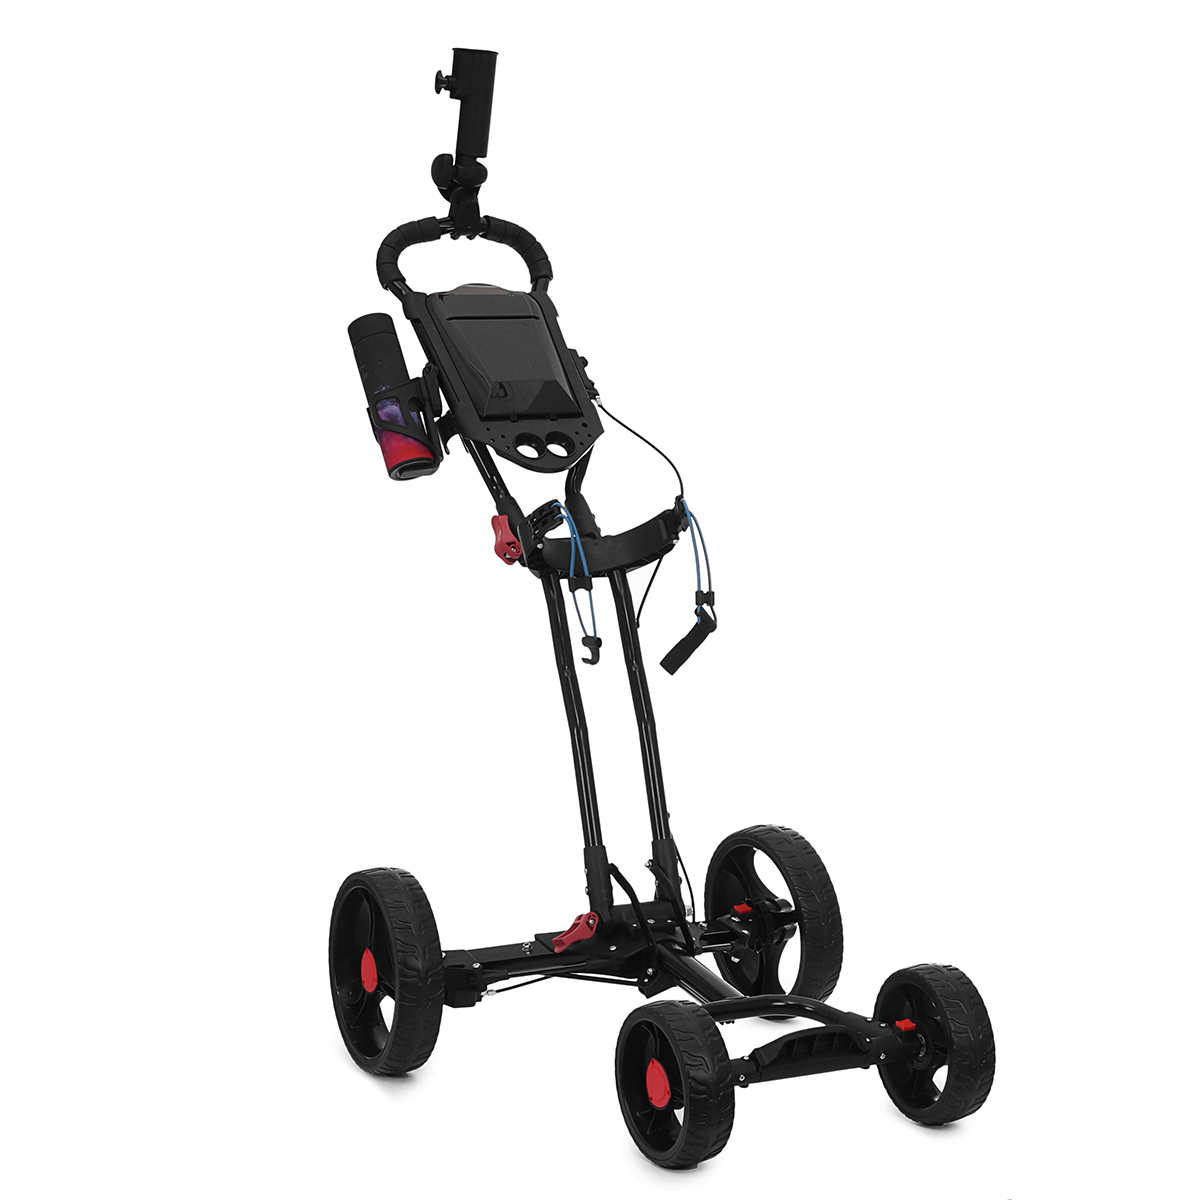 4-Wheel-Folding-Golf-Pull-Push-Cart-Golf-Trolley-Golf-Bag-with-Umbrella-Cup-Holder-Outdoor-Team-Spor-1809198-4